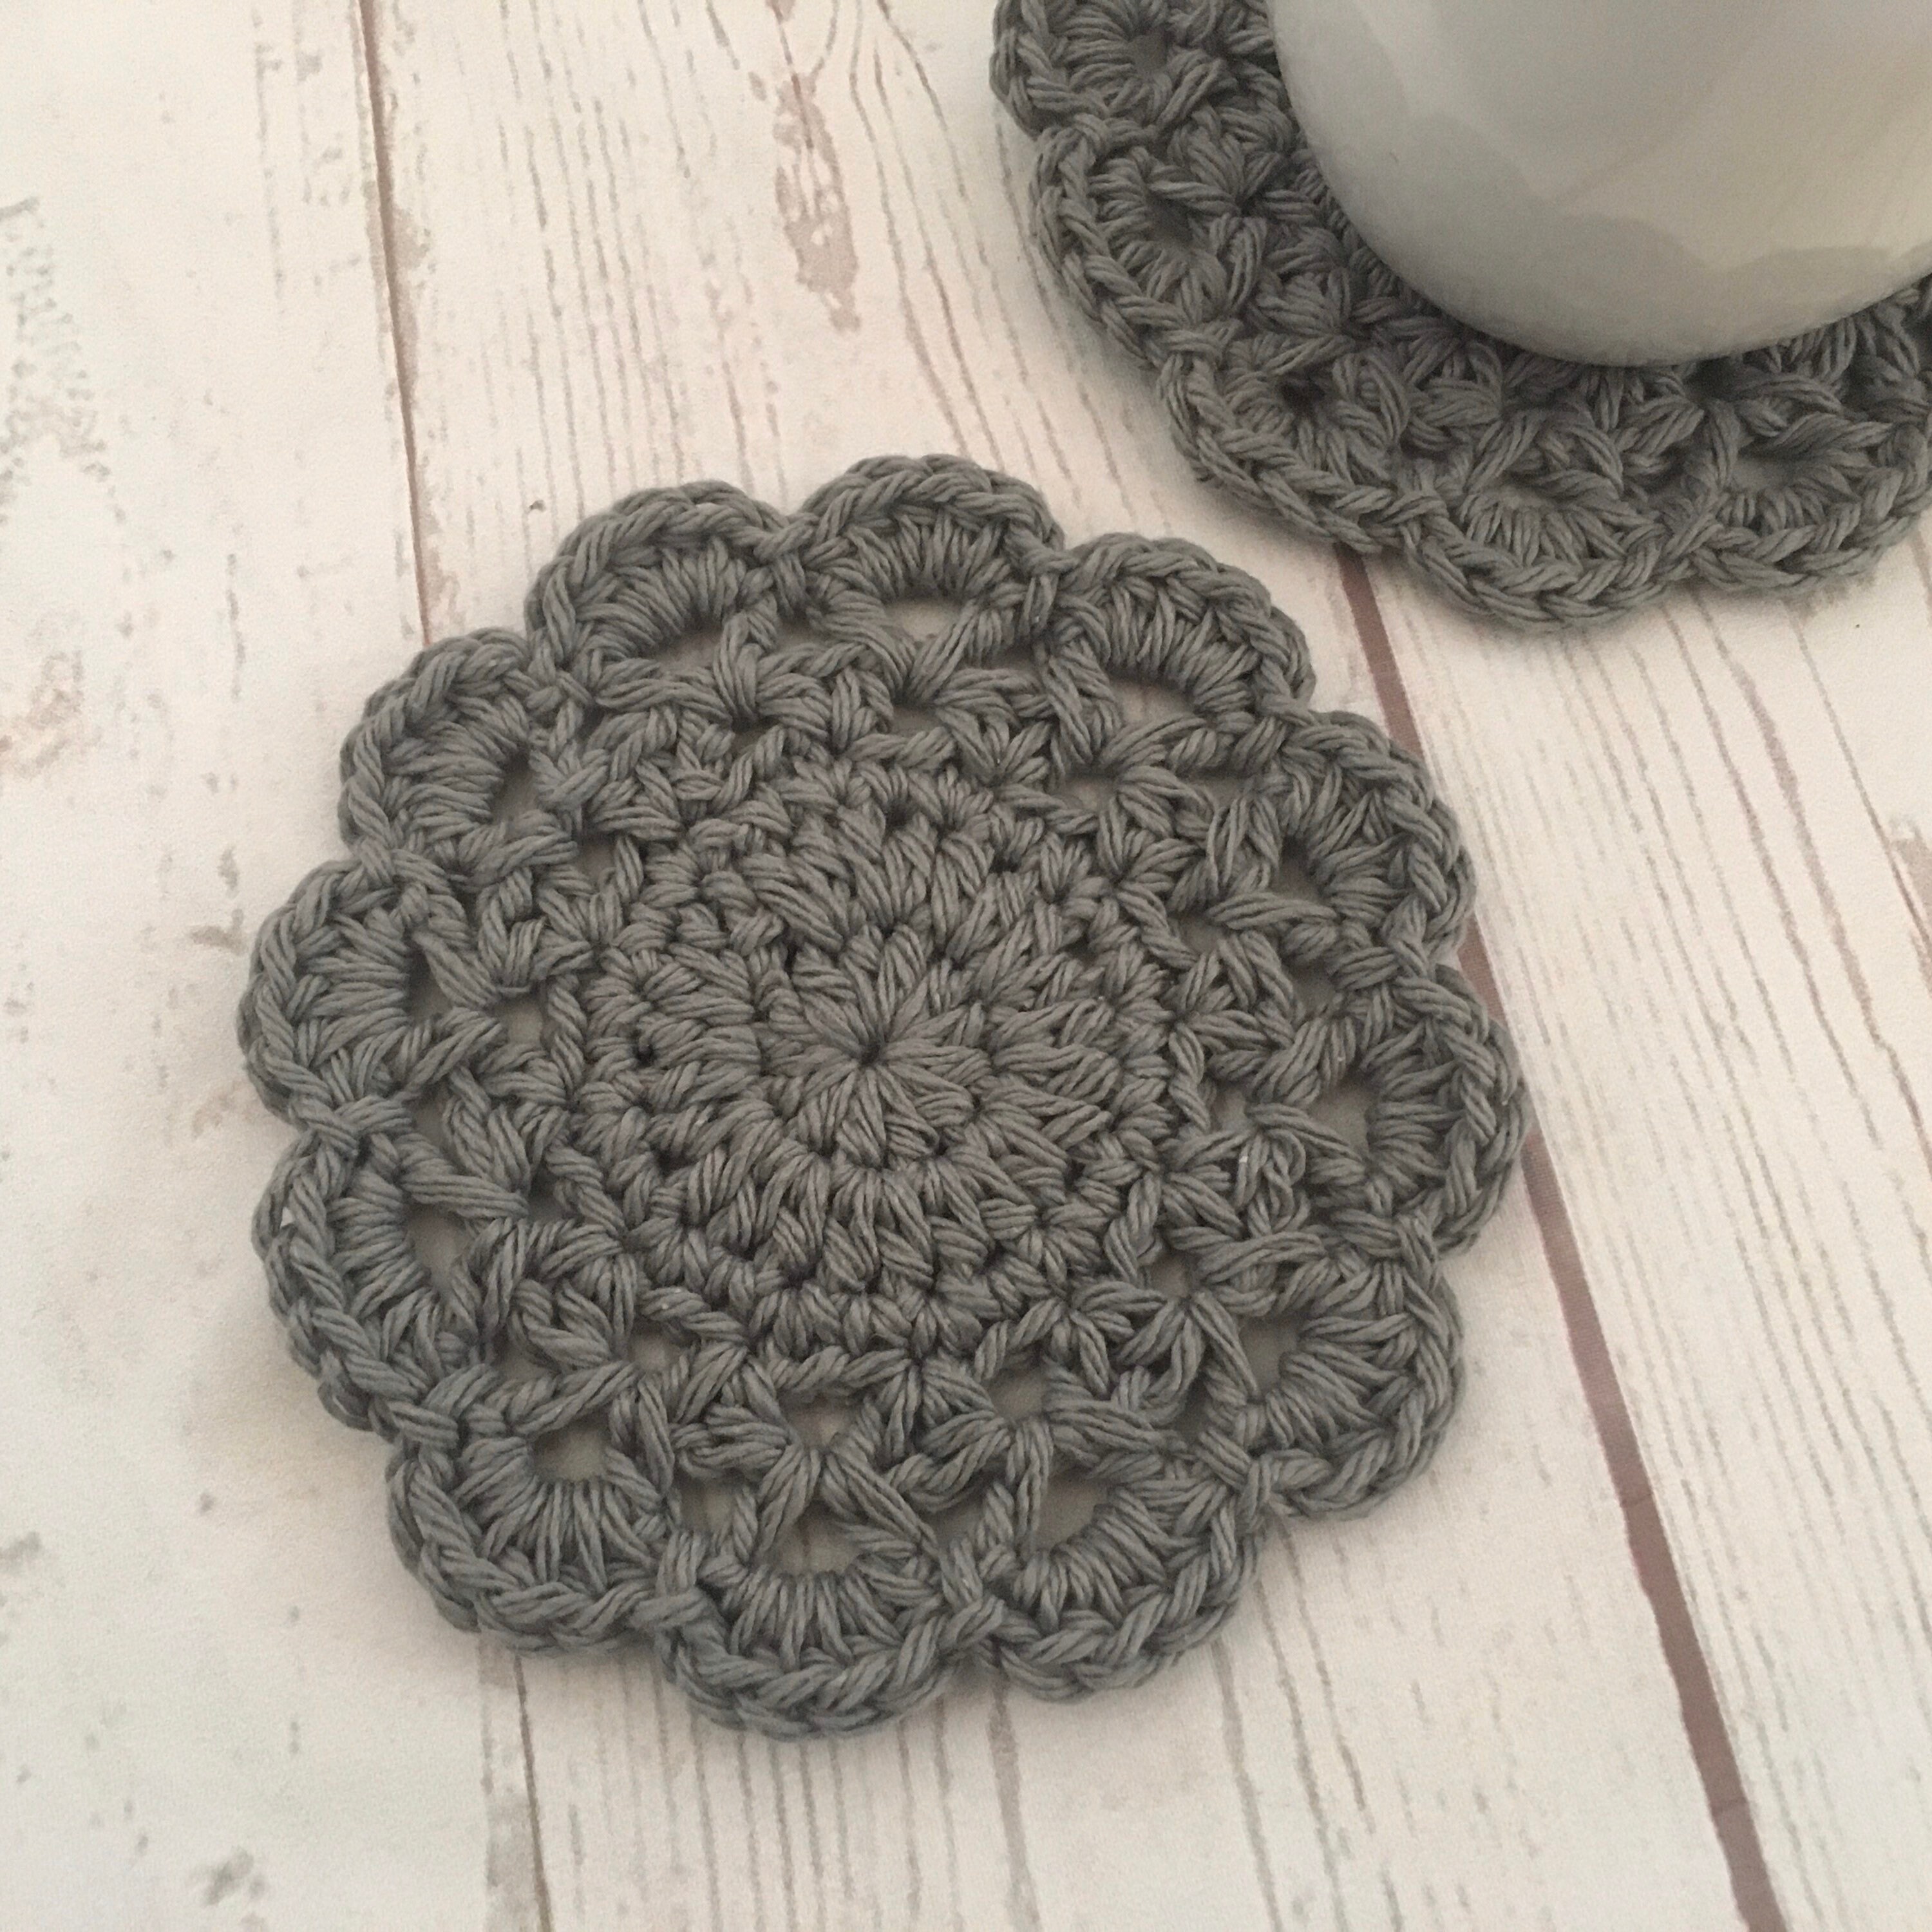 Crochet 5 Doily Coaster in Cotton Farmhouse Decor